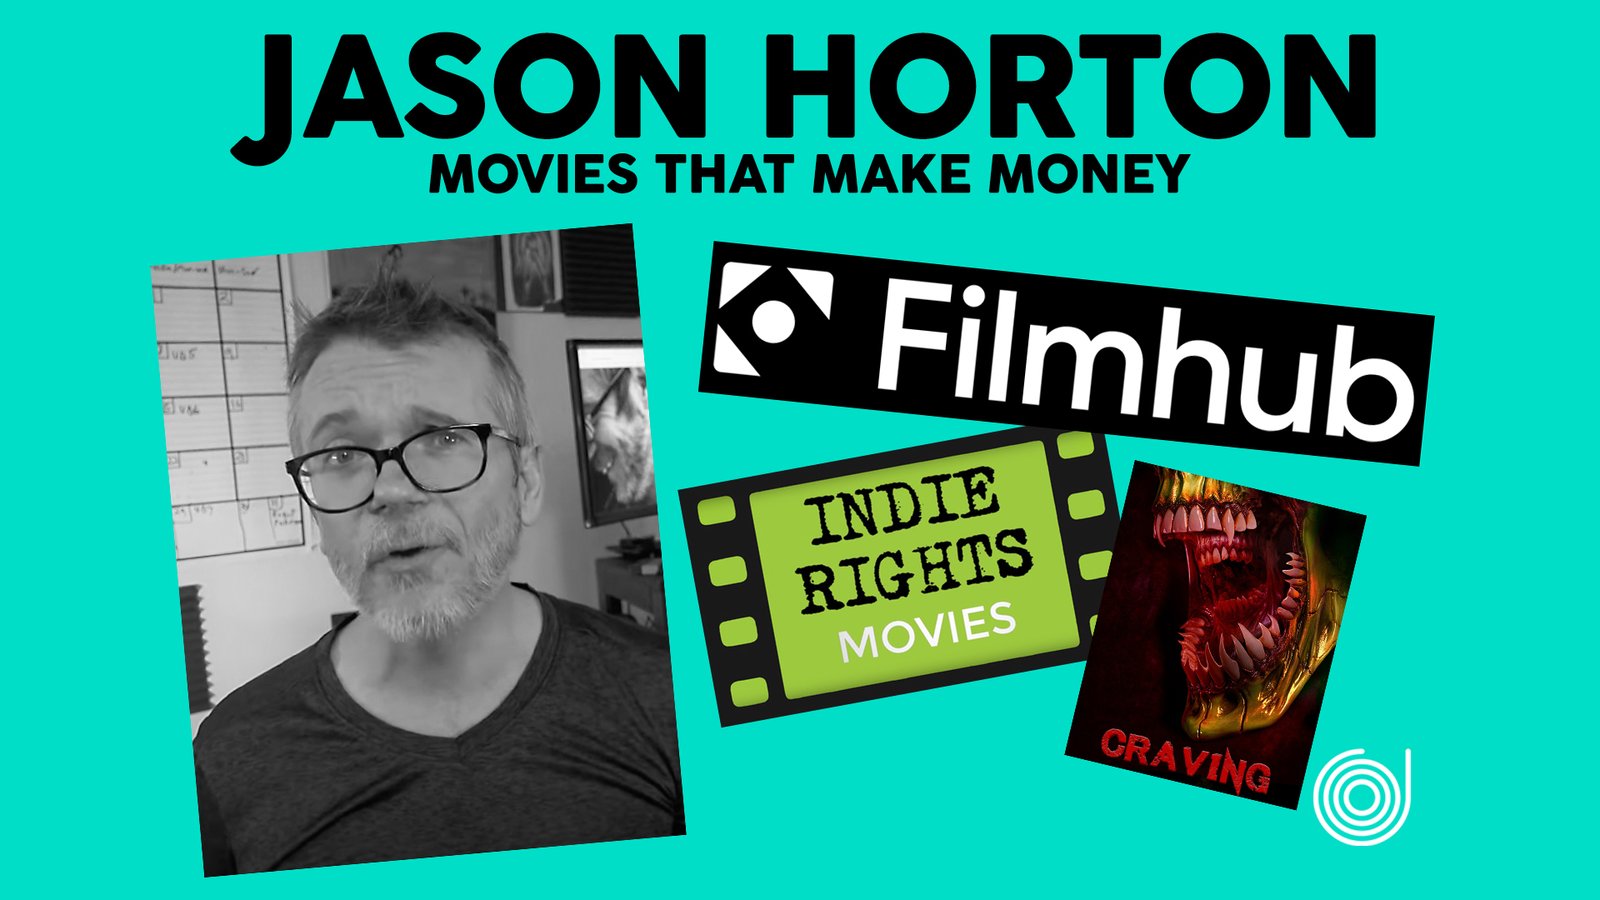 Film Hub with Jason Horton